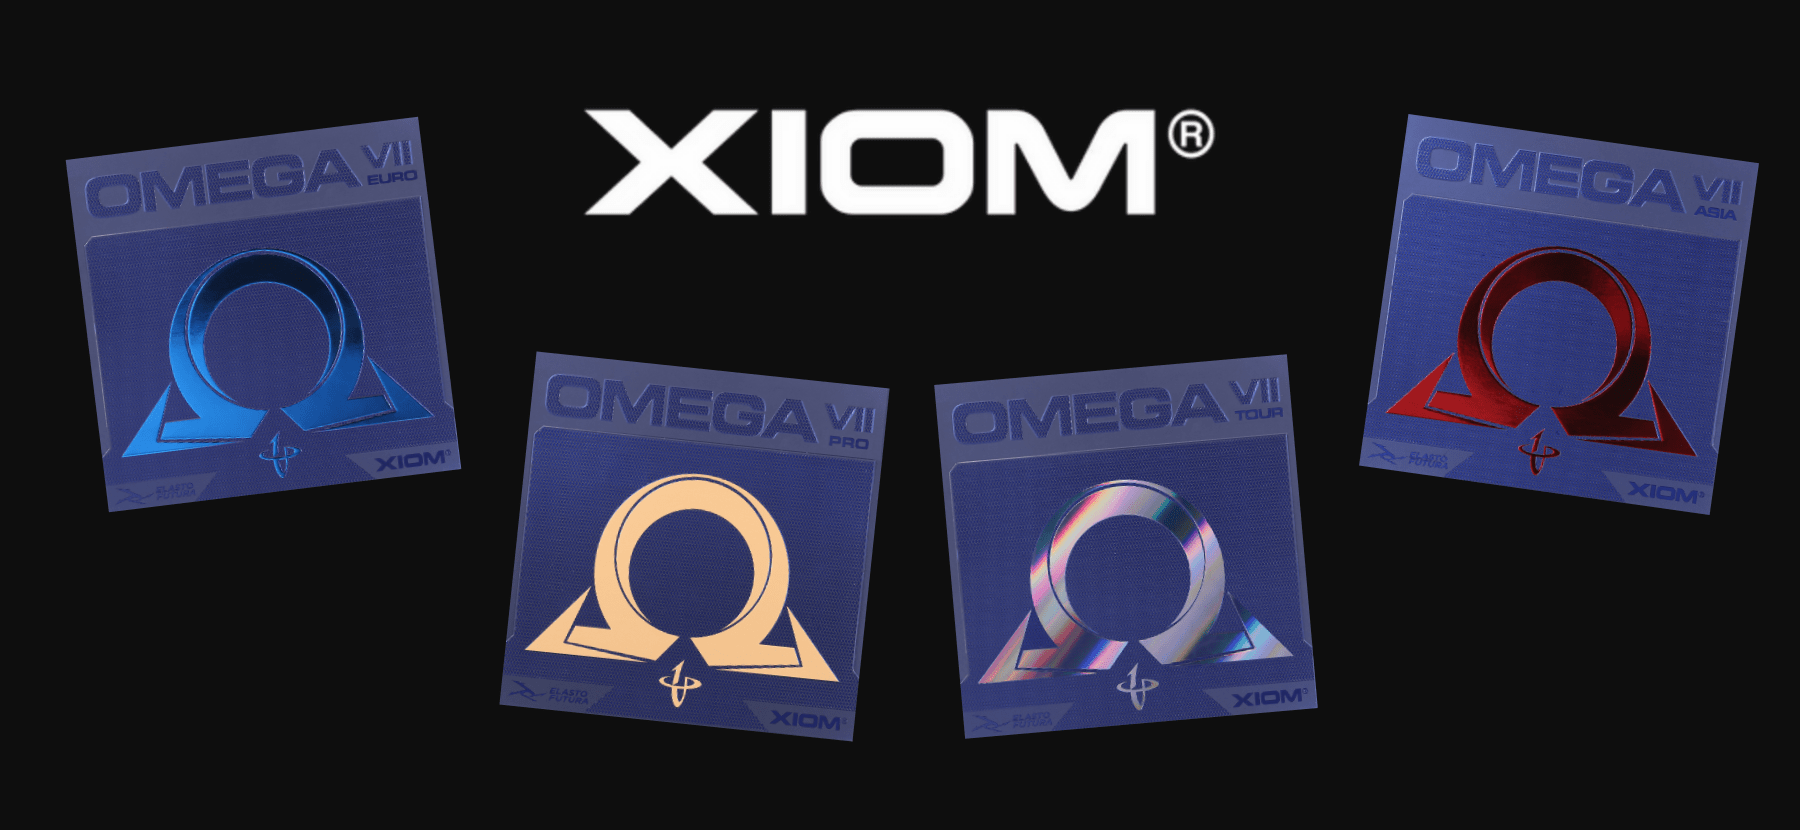 Xiom Omega VII Rubbers